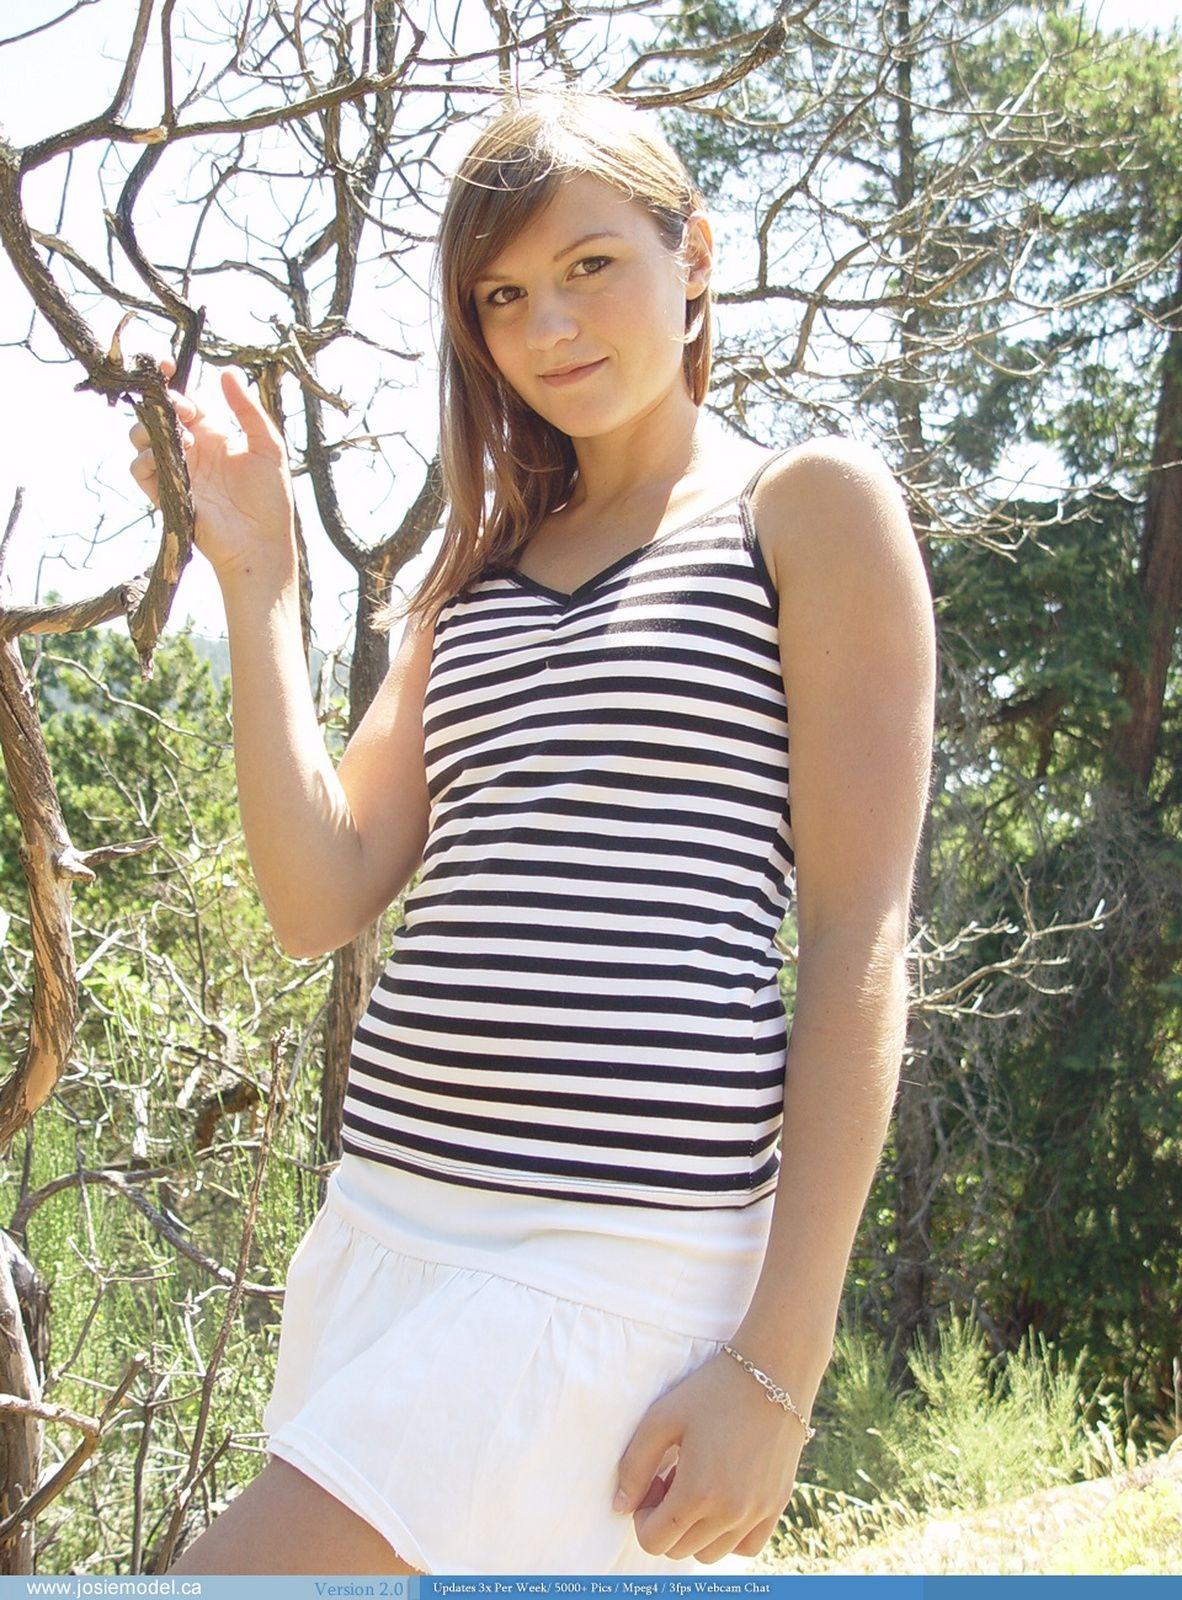 Pictures of teen hottie Josie Model showing her hotness outside #55697072